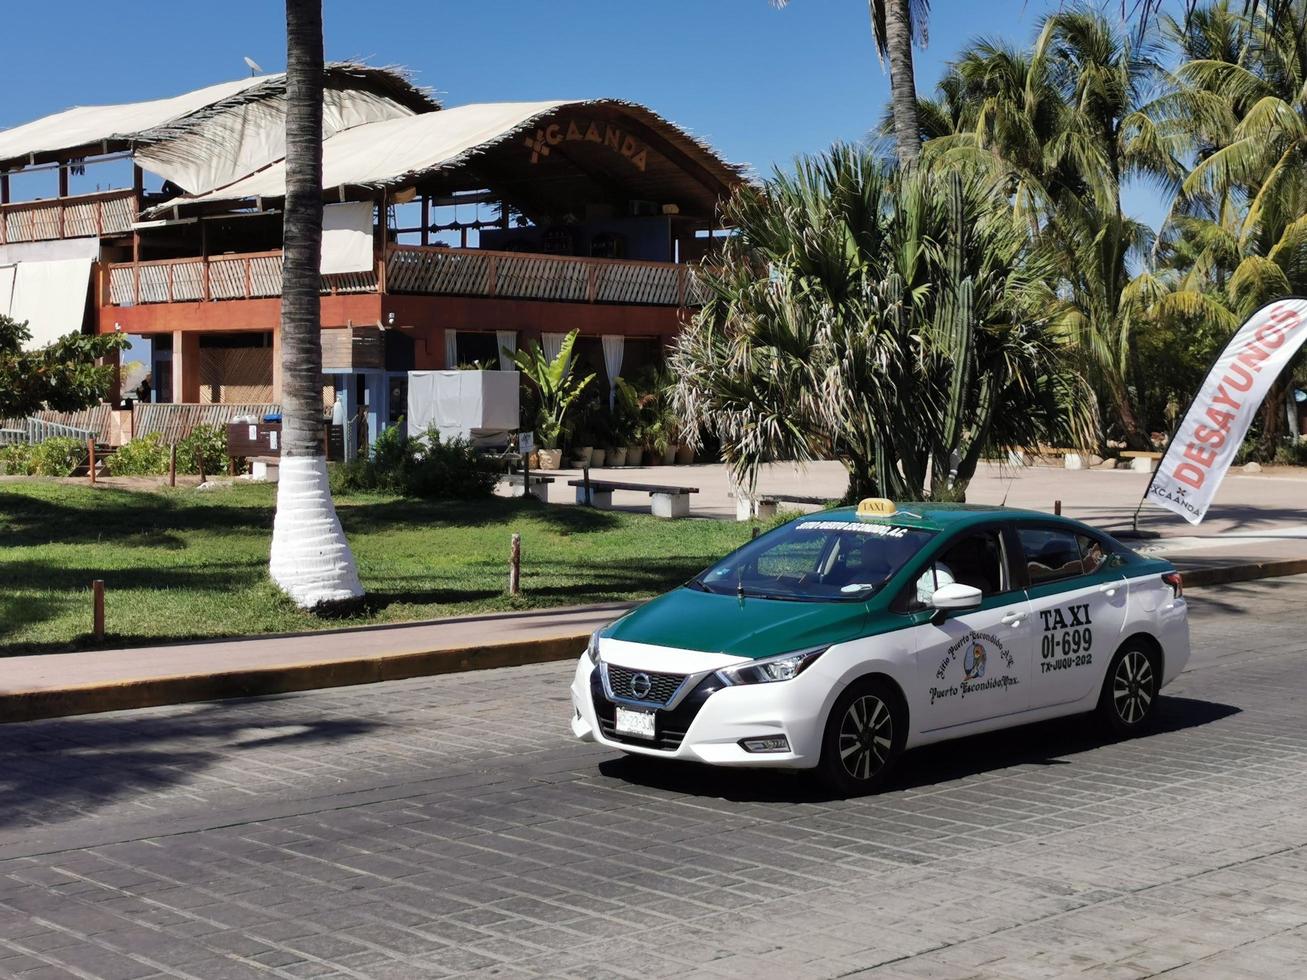 puerto escondido oaxaca mexique 2023 voiture de taxi vert coloré à puerto escondido mexique. photo